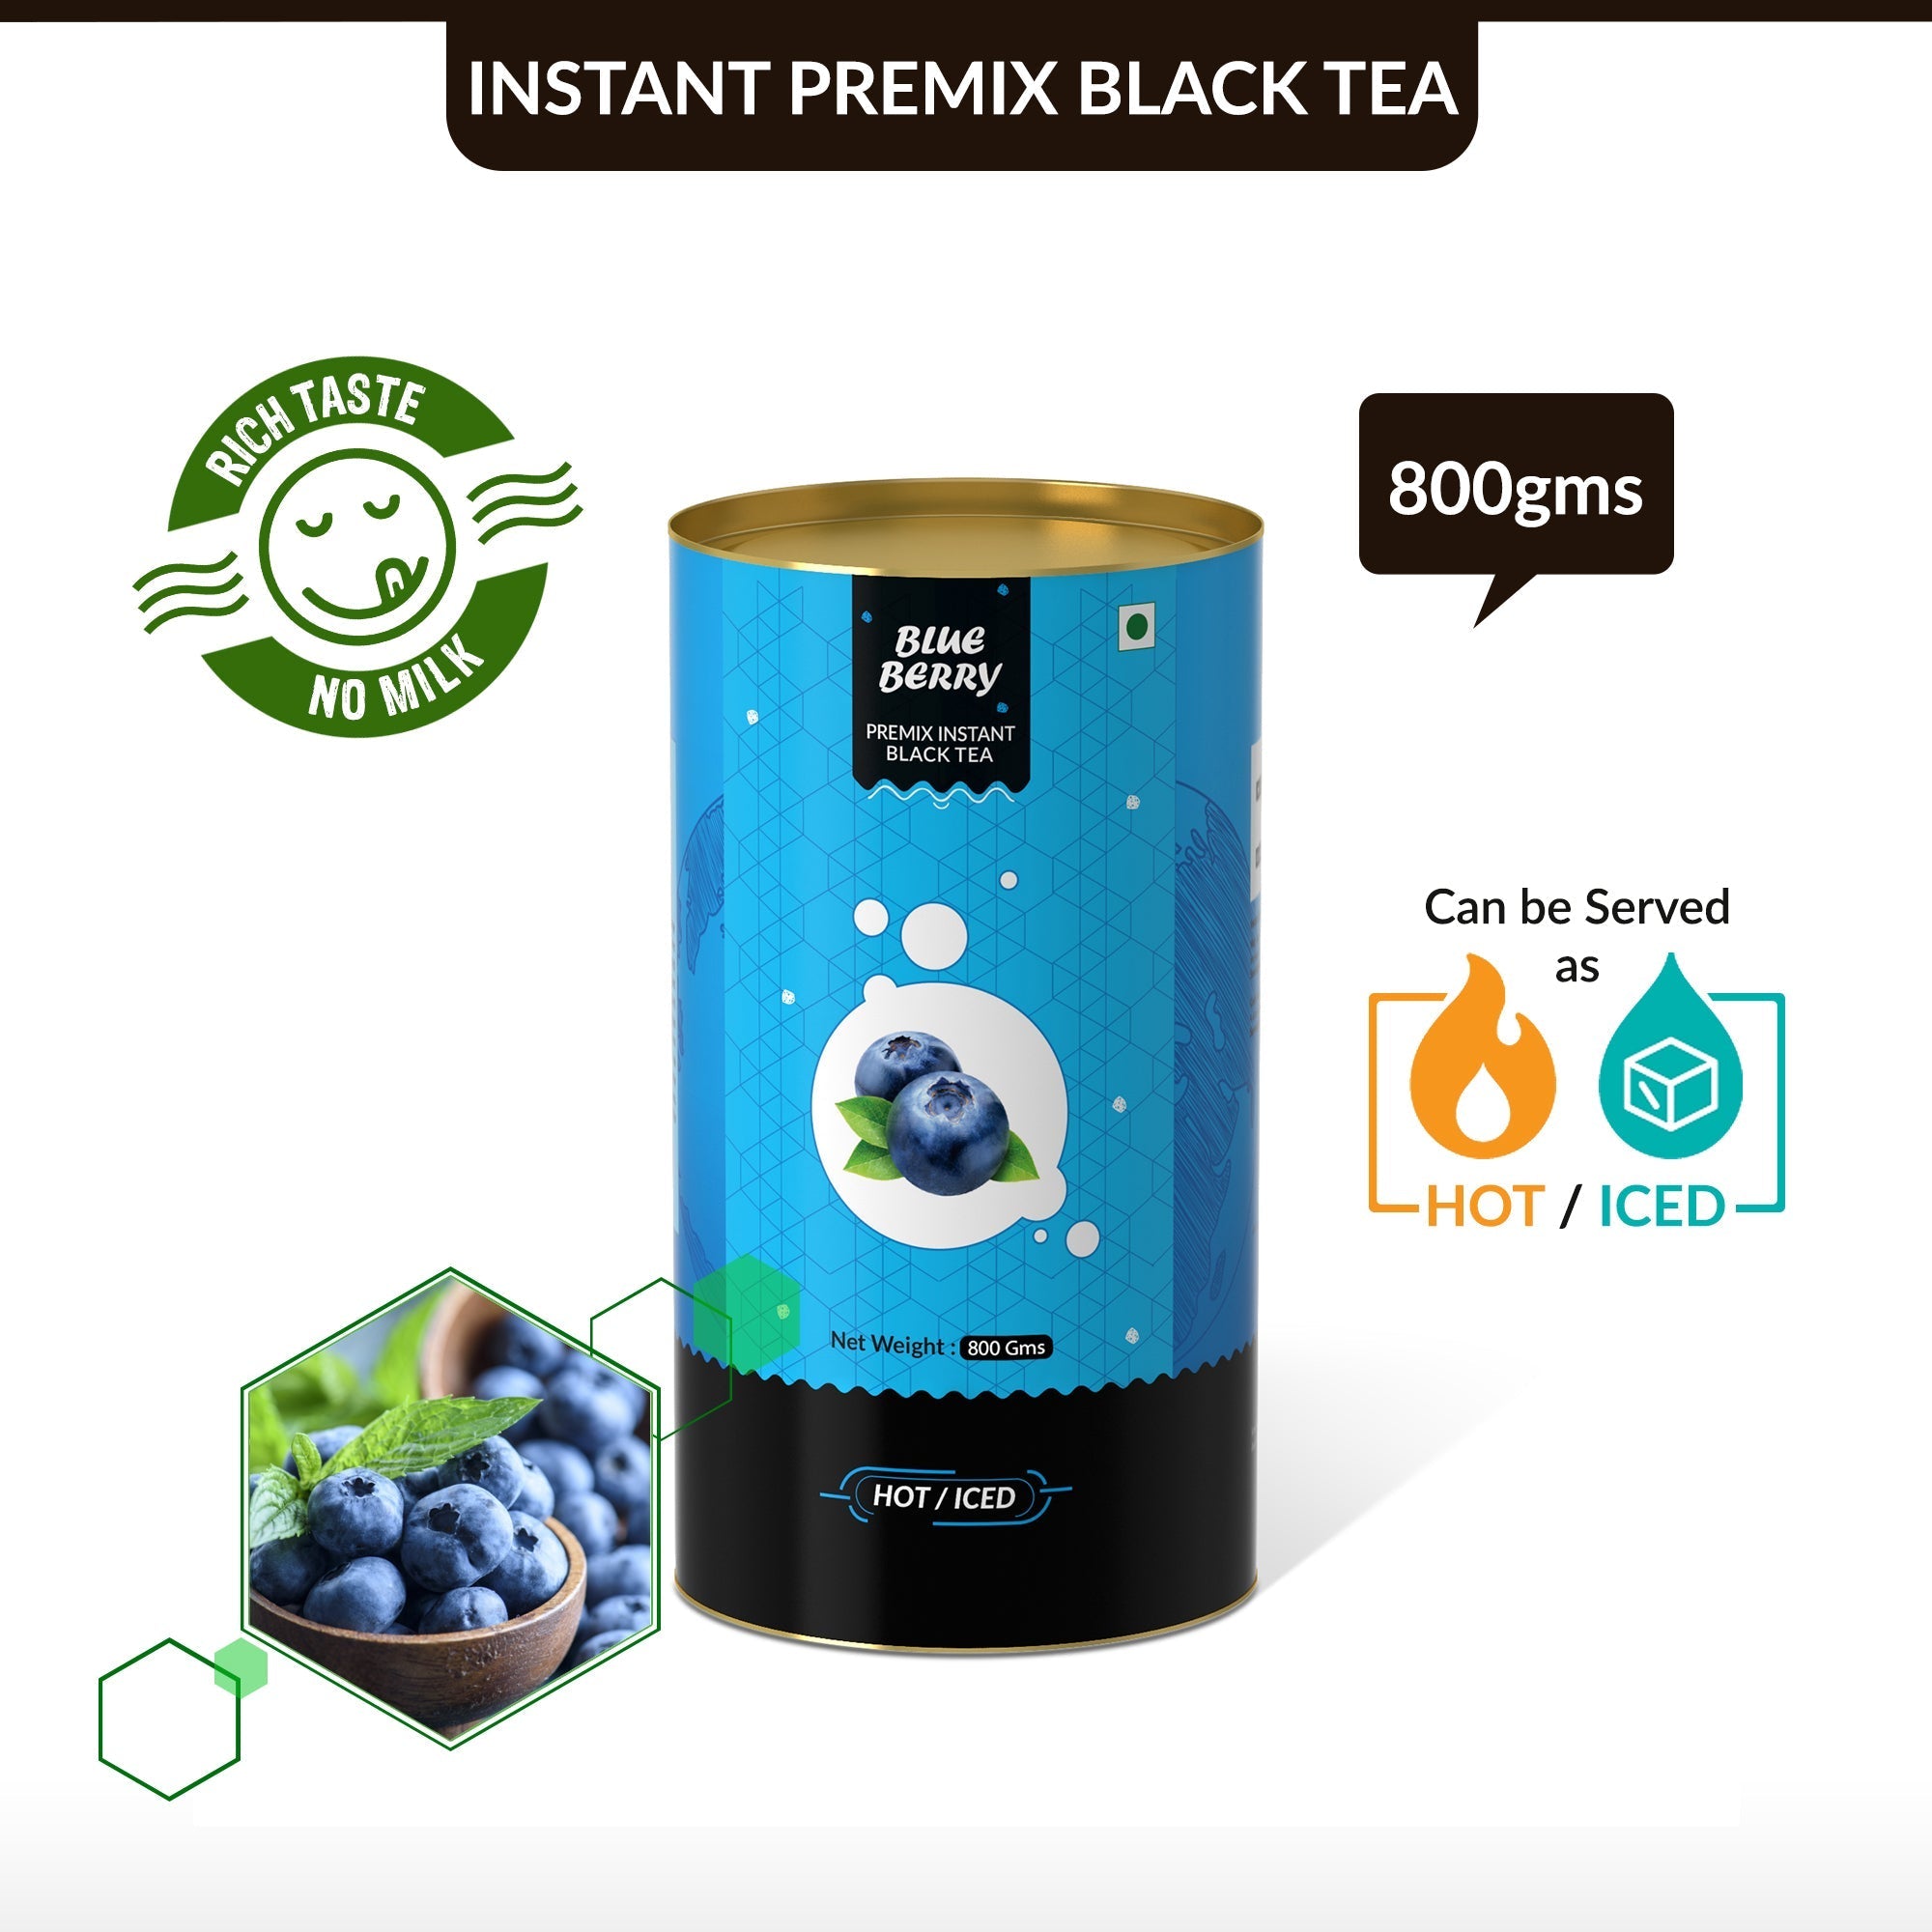 Blueberry Flavored Instant Black Tea - 800 gms